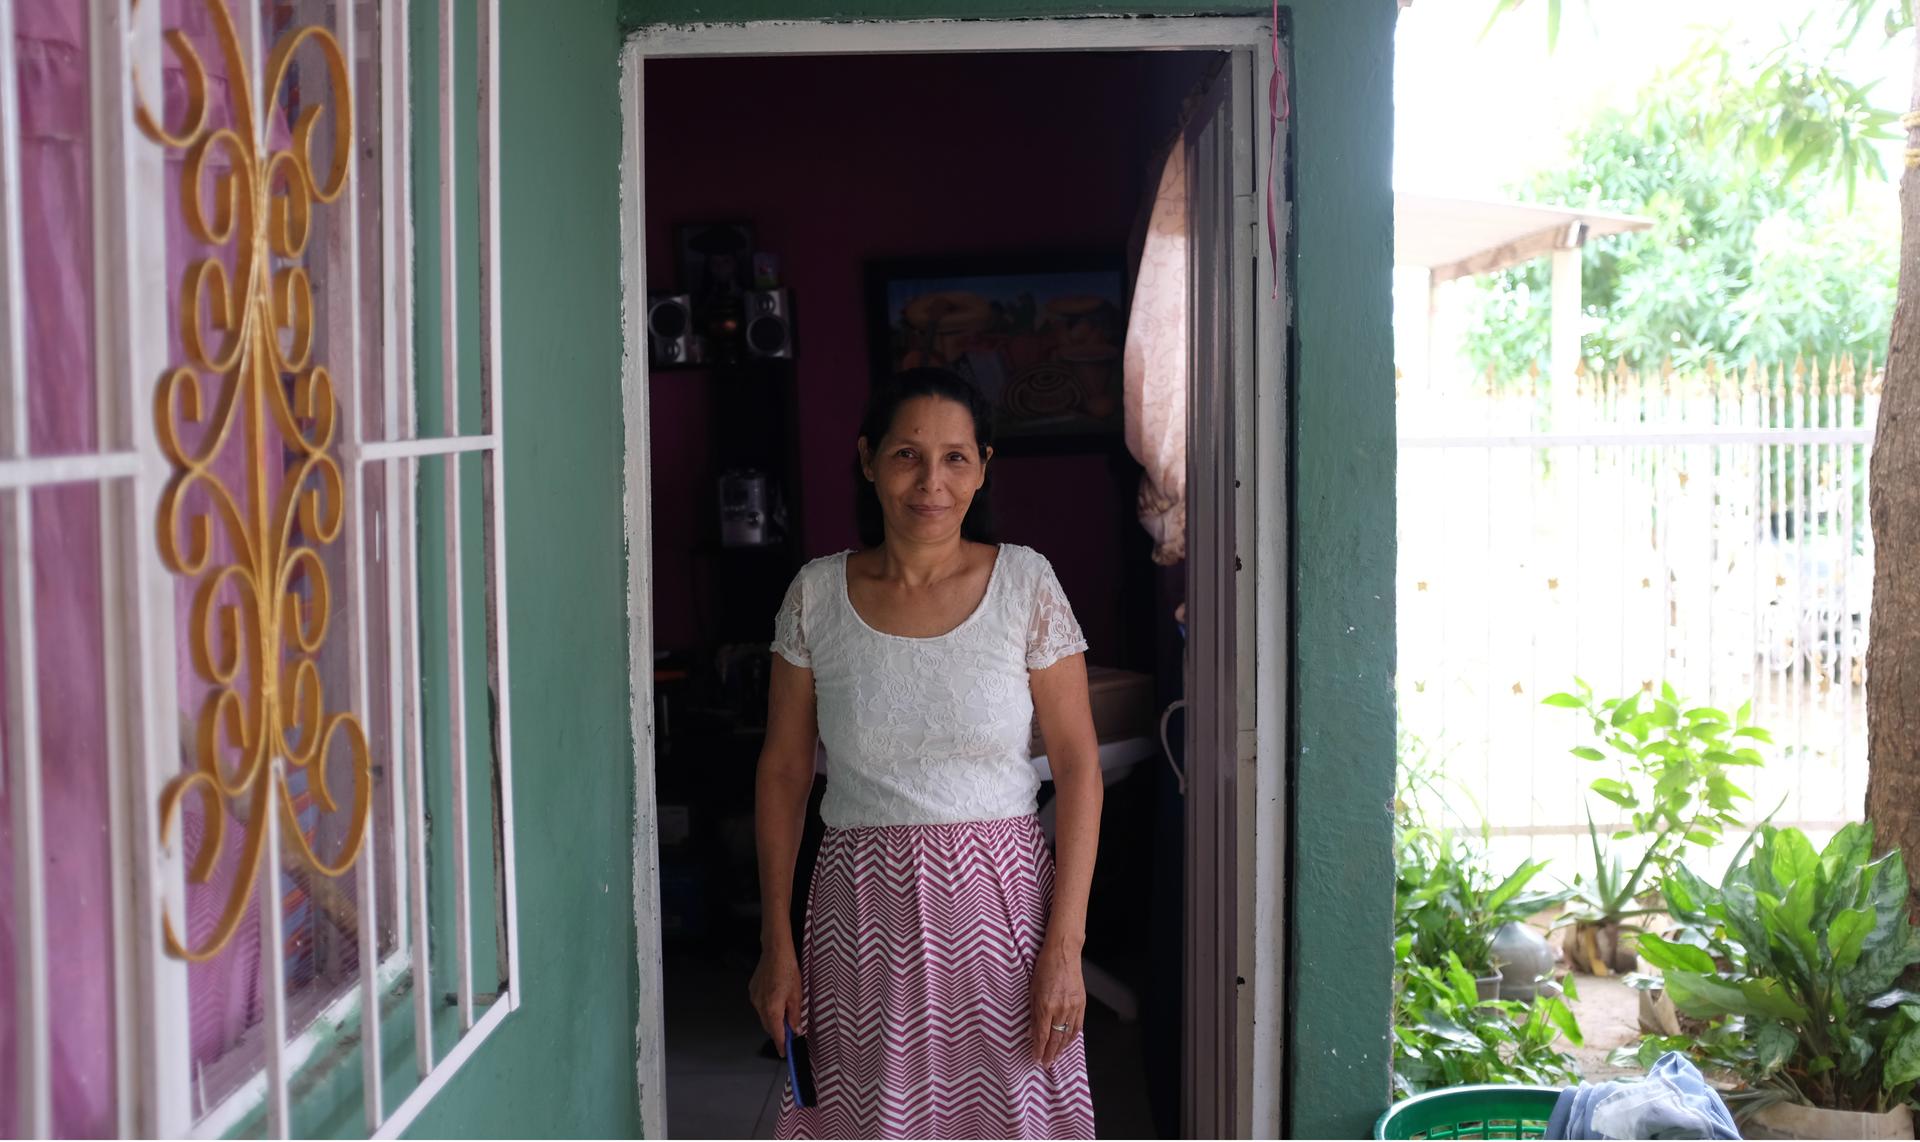 Ana Luz Ortega stands in the doorway of her home in the City of Women.